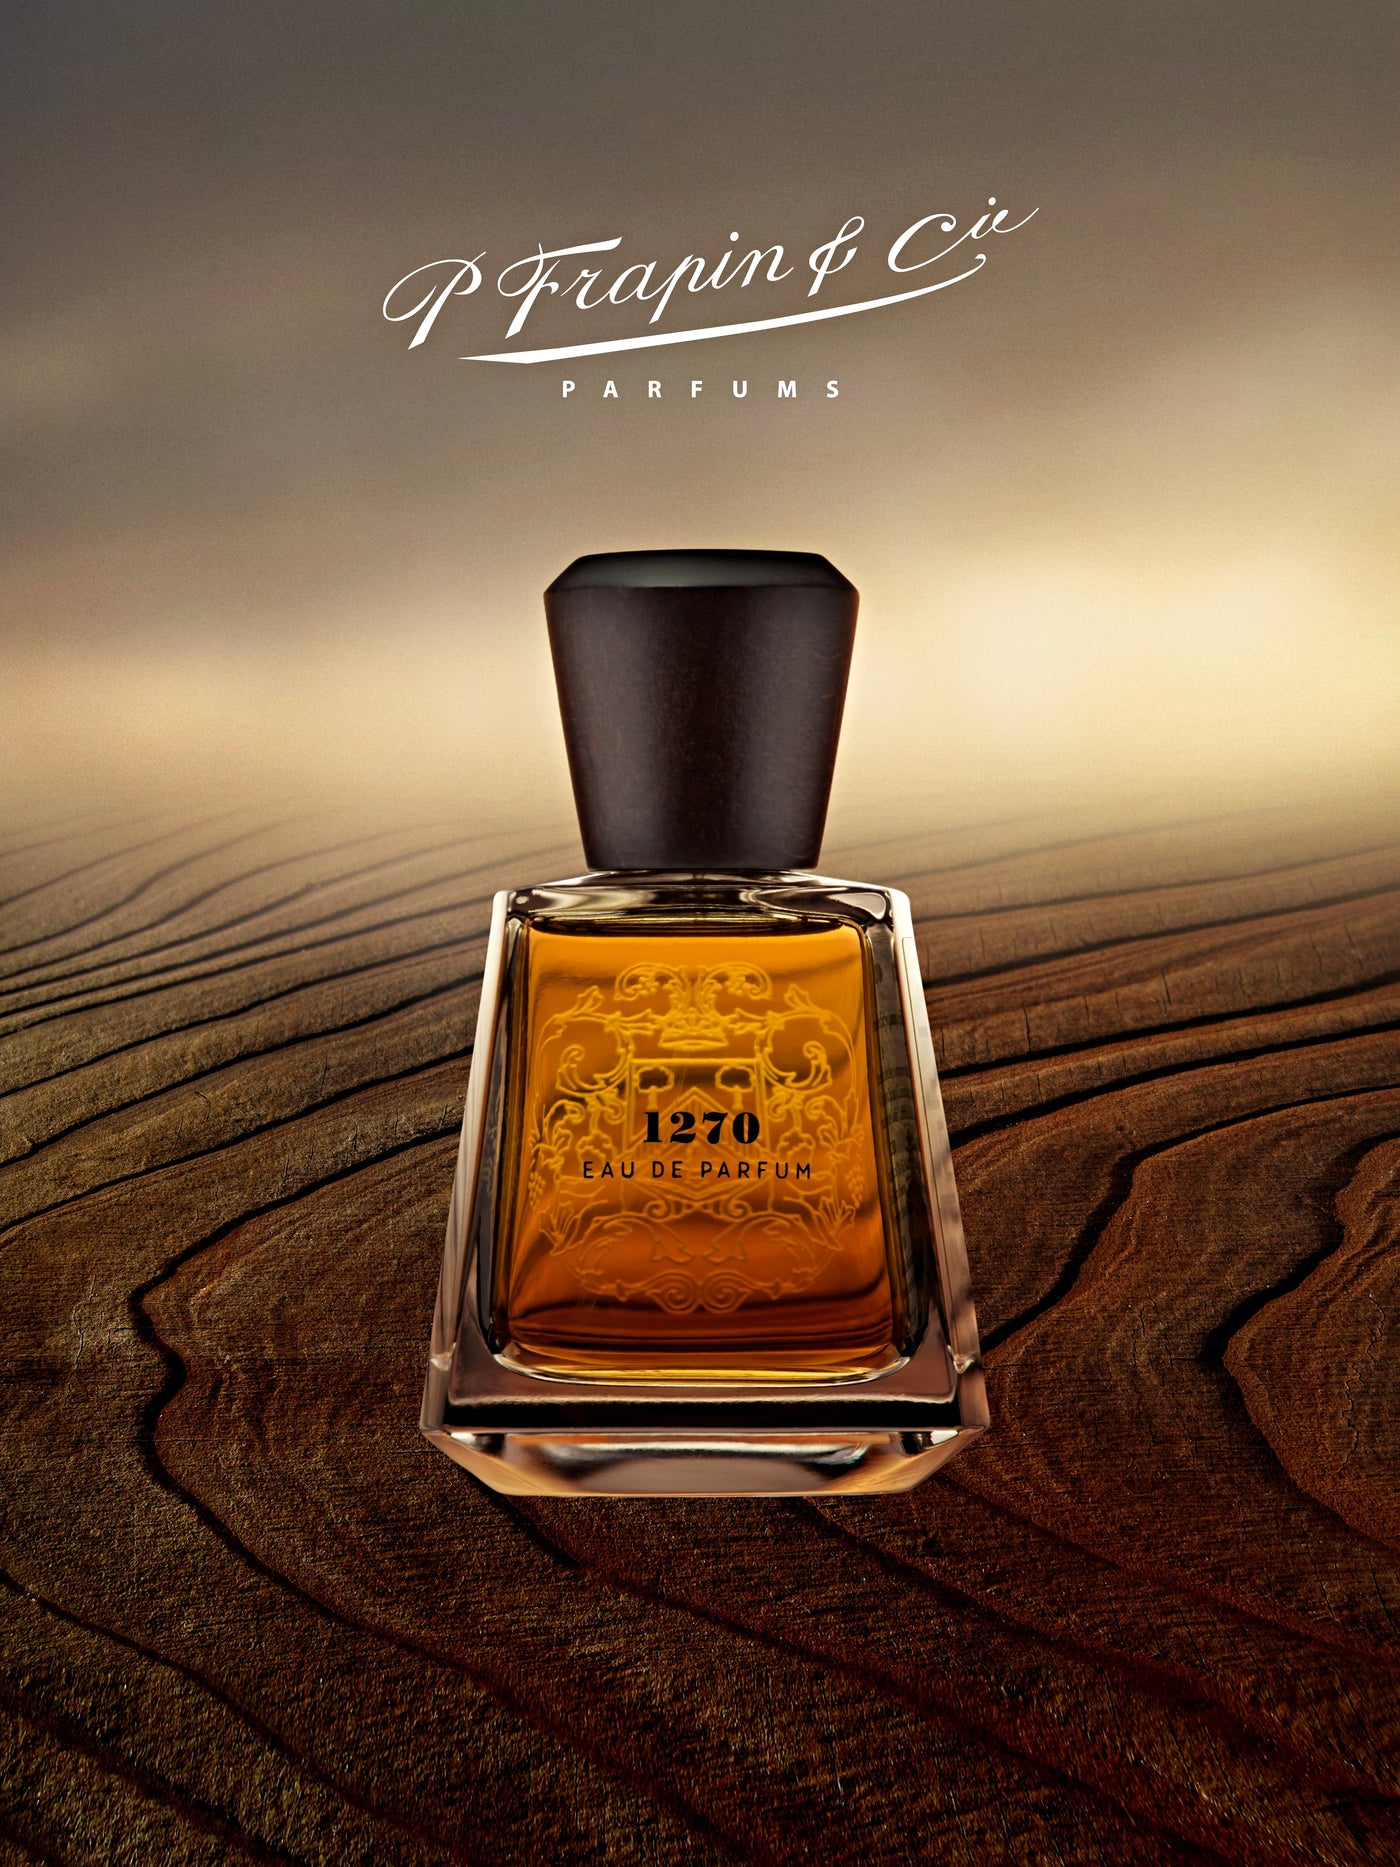 1270 - P.Frapin & Cie - Eau de Parfum 100 ml - Tuxedo.no - Nettbutikk - On Demand Barbers Oslo Norway